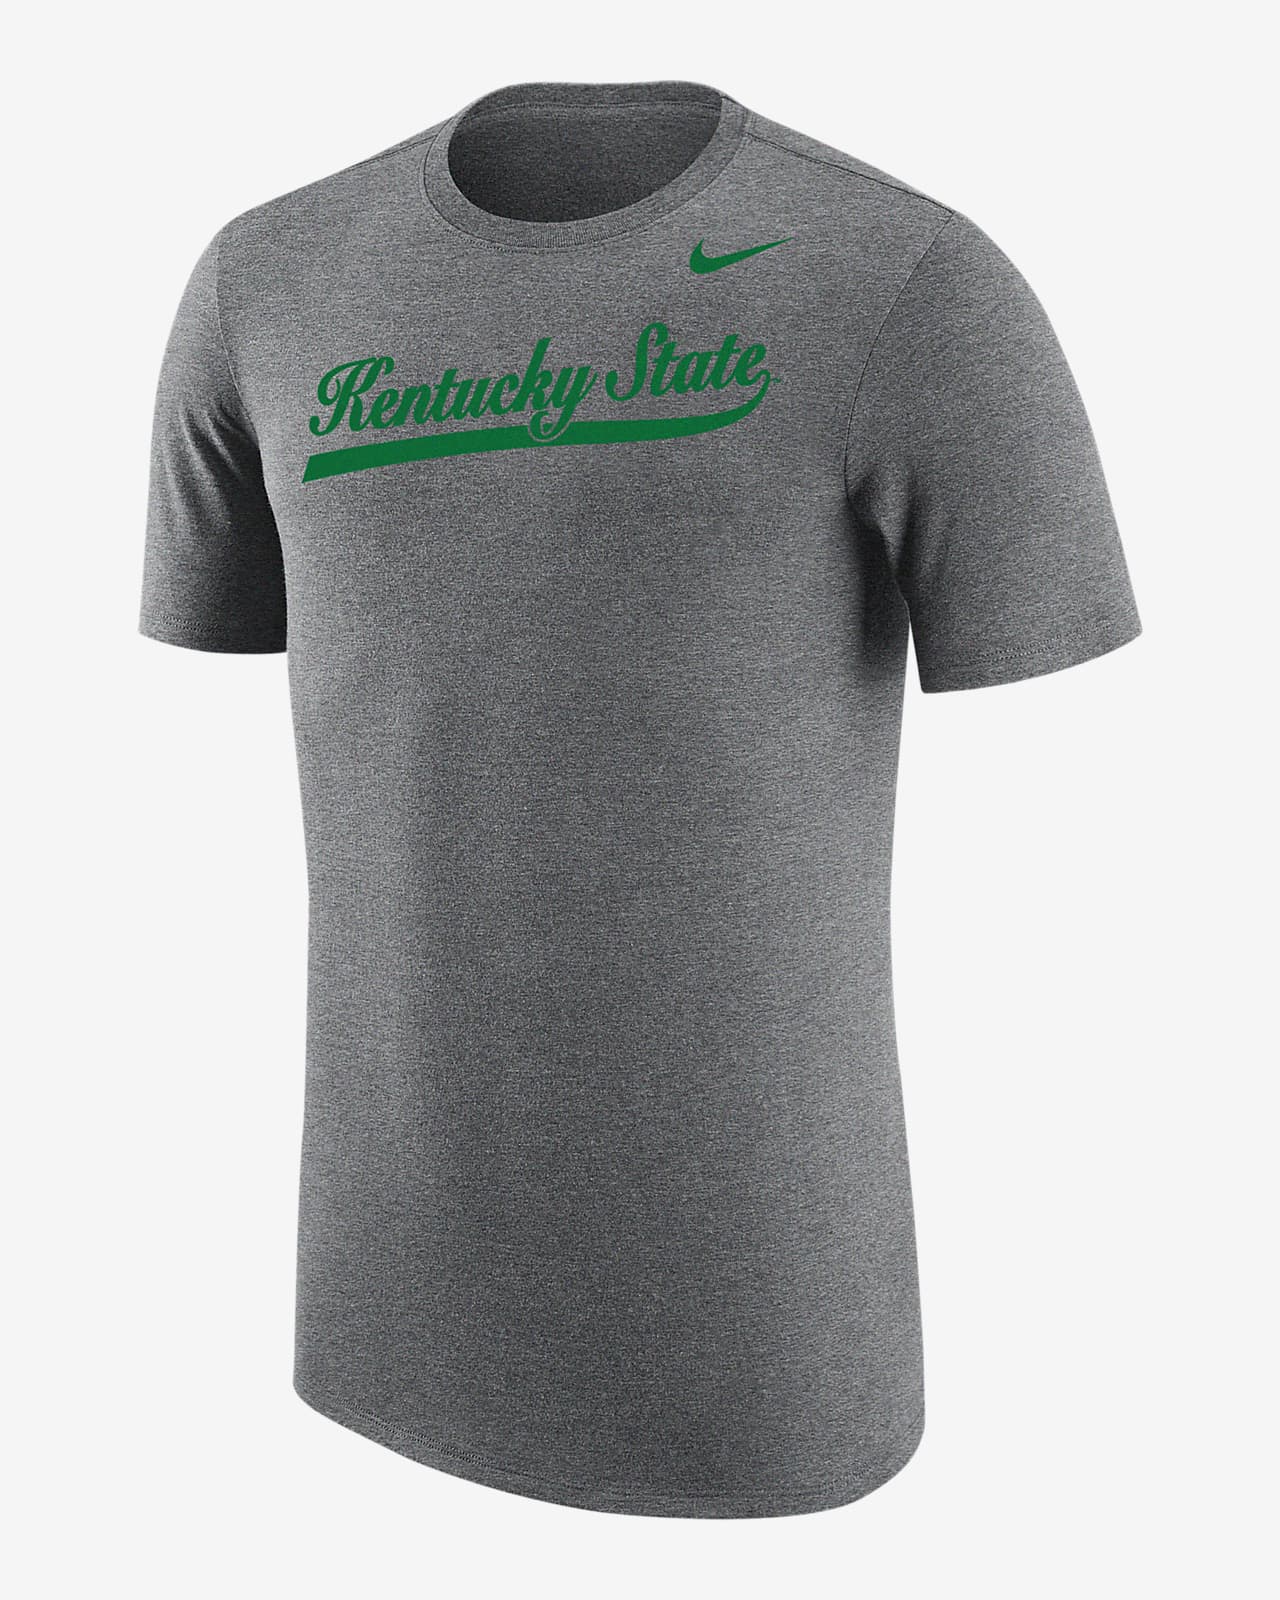 Kentucky State Men's Nike College T-Shirt